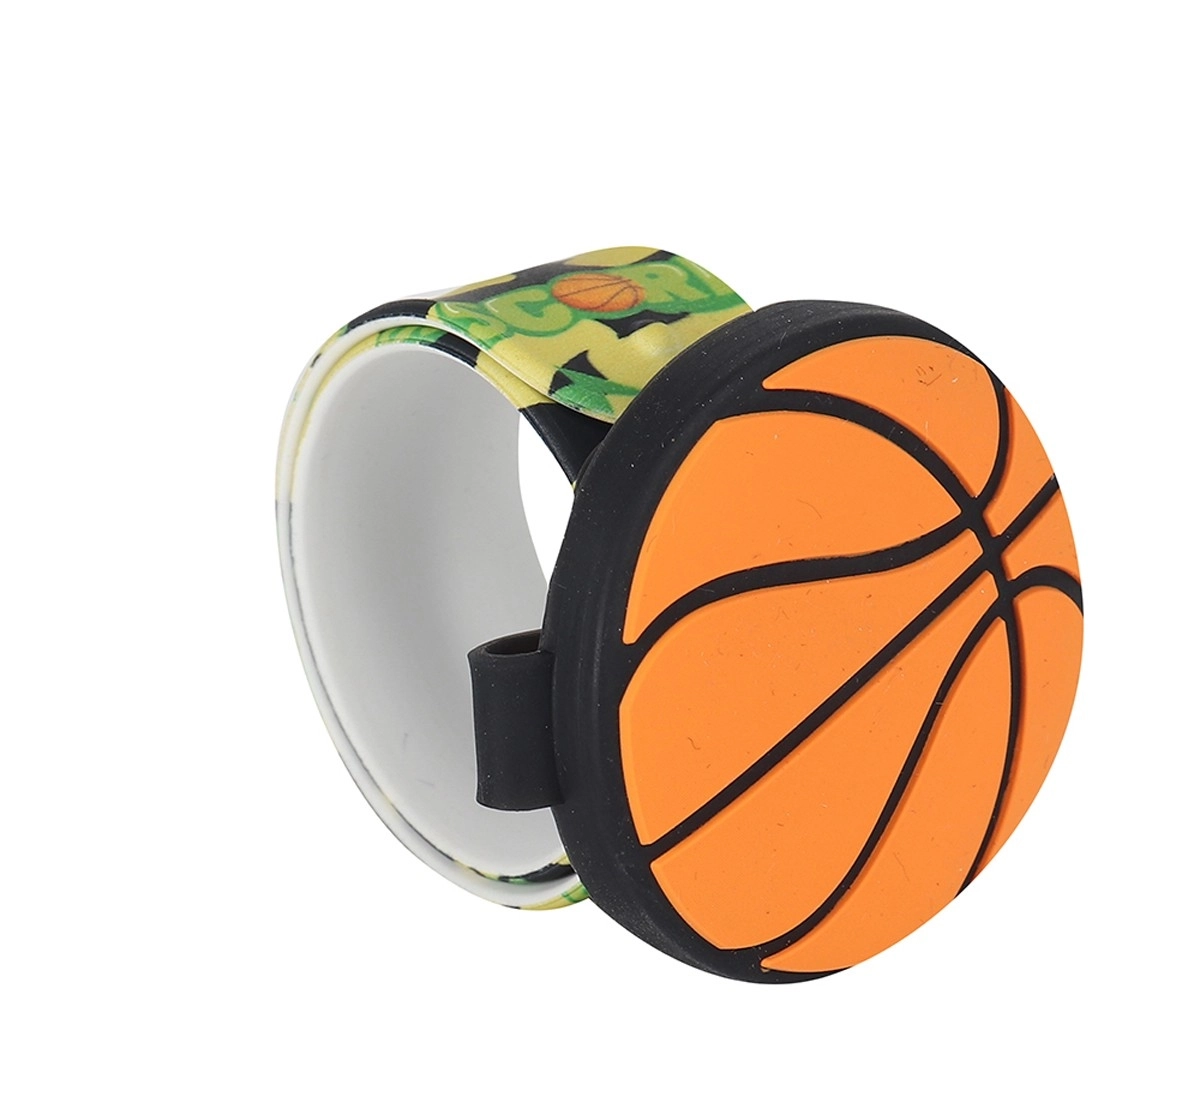 Flip Flap Basket Ball Shaped Watch by Hamster London for Kids, Green, 3Y+